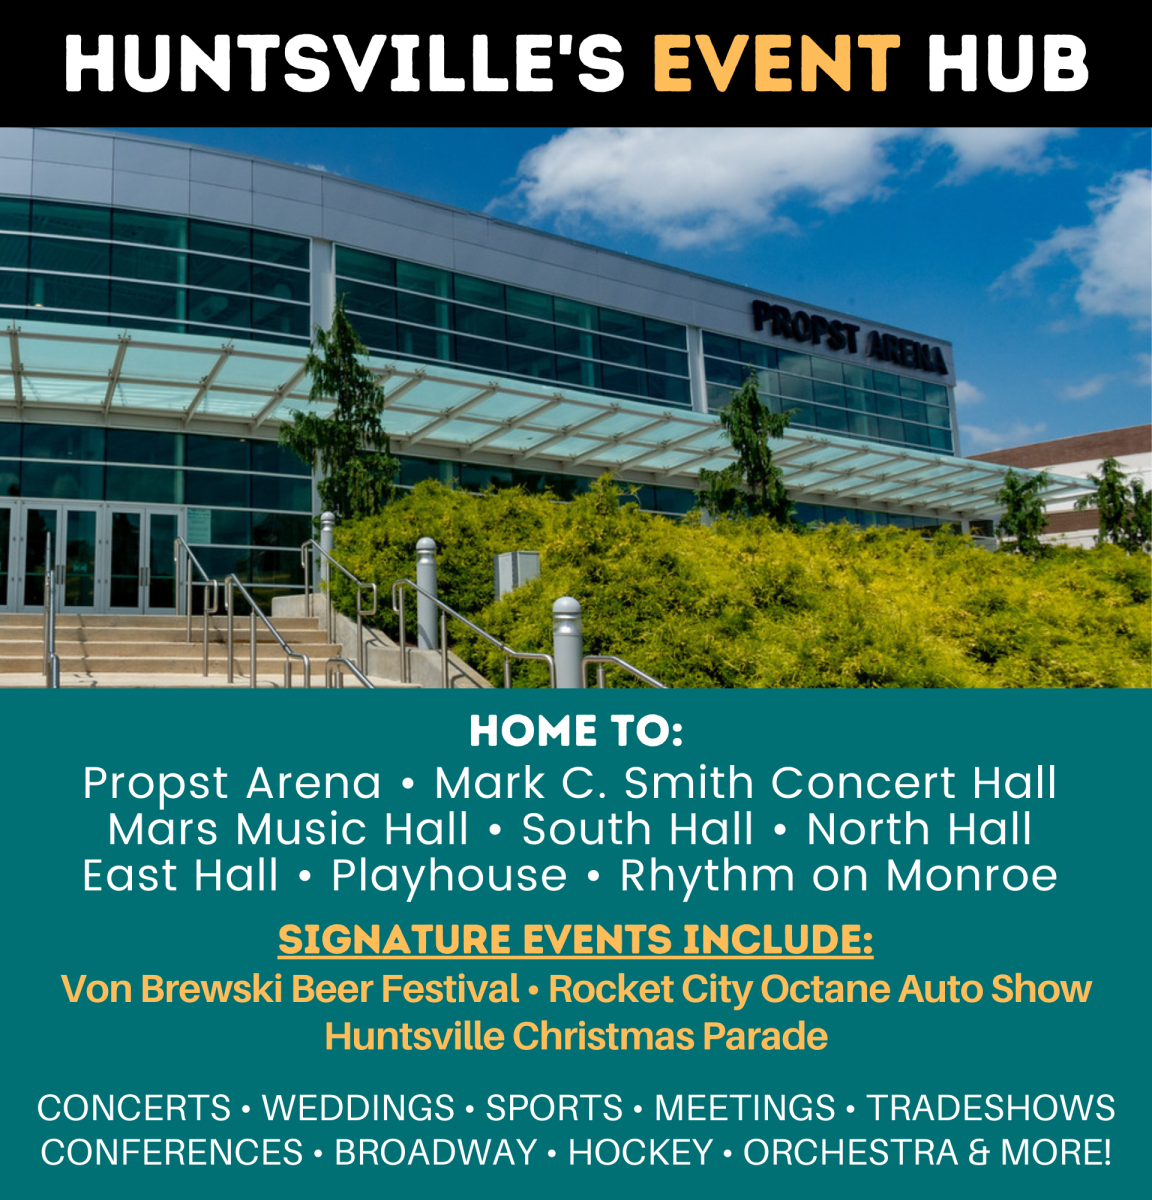 Huntsville's Event Hub